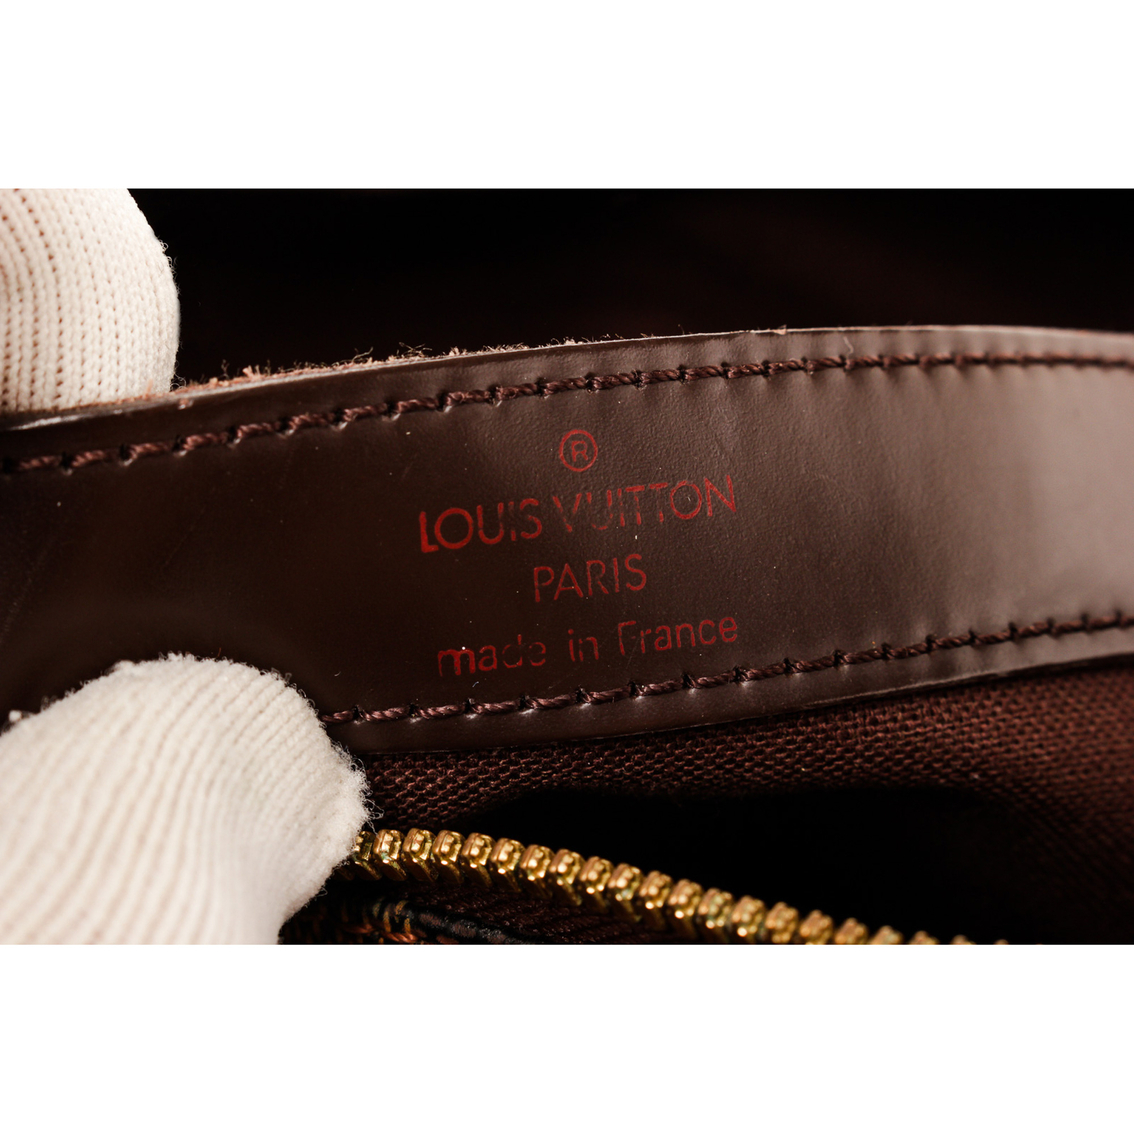 Authenticated Used Louis Vuitton Monogram Unisex Golf Ball Bag